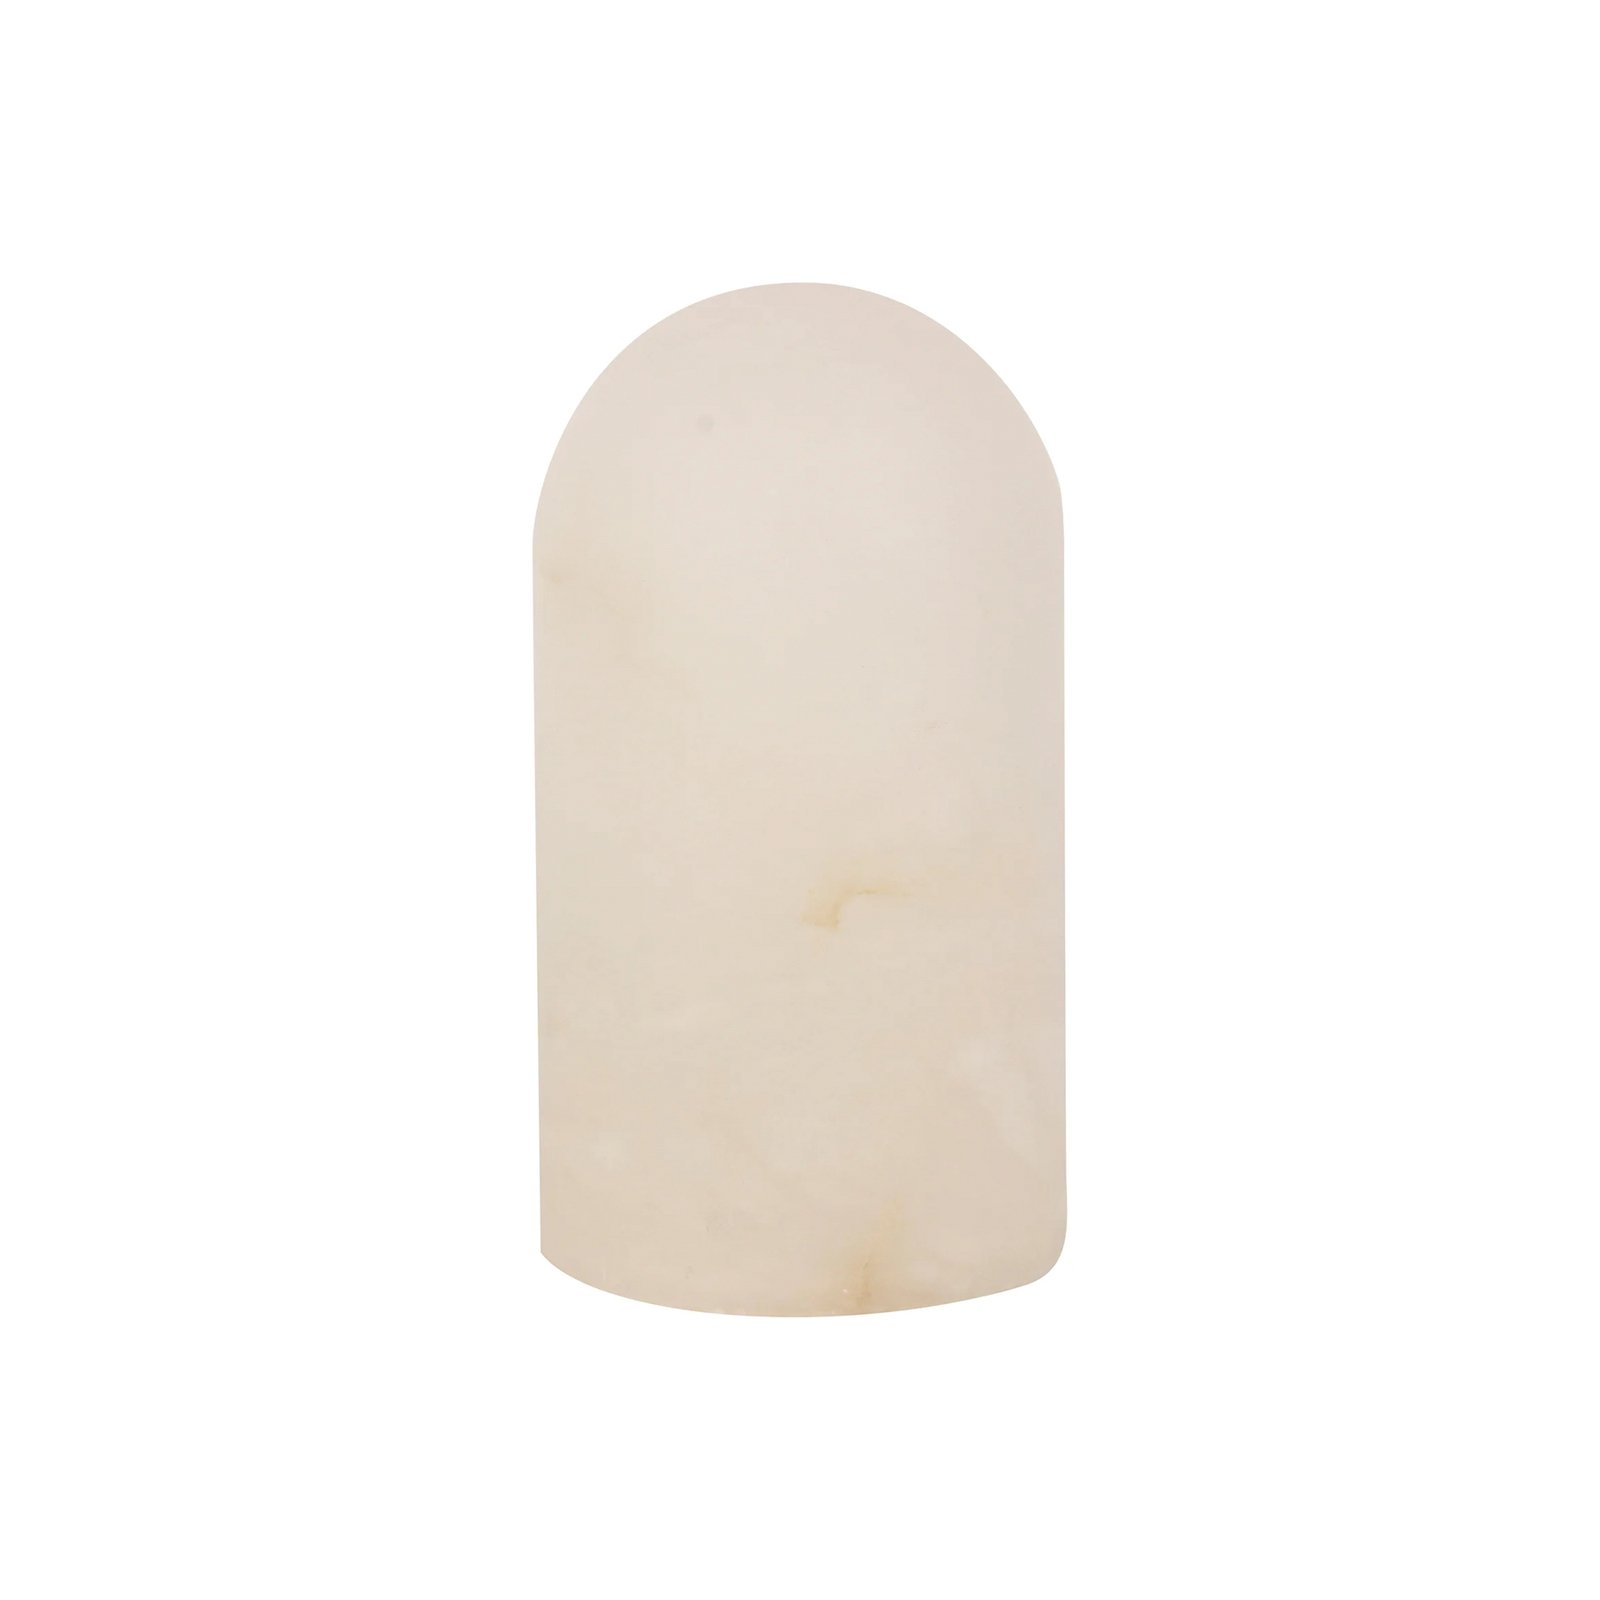 Beacon tafellamp Panton, wit albast steen, hoogte 17,5 cm